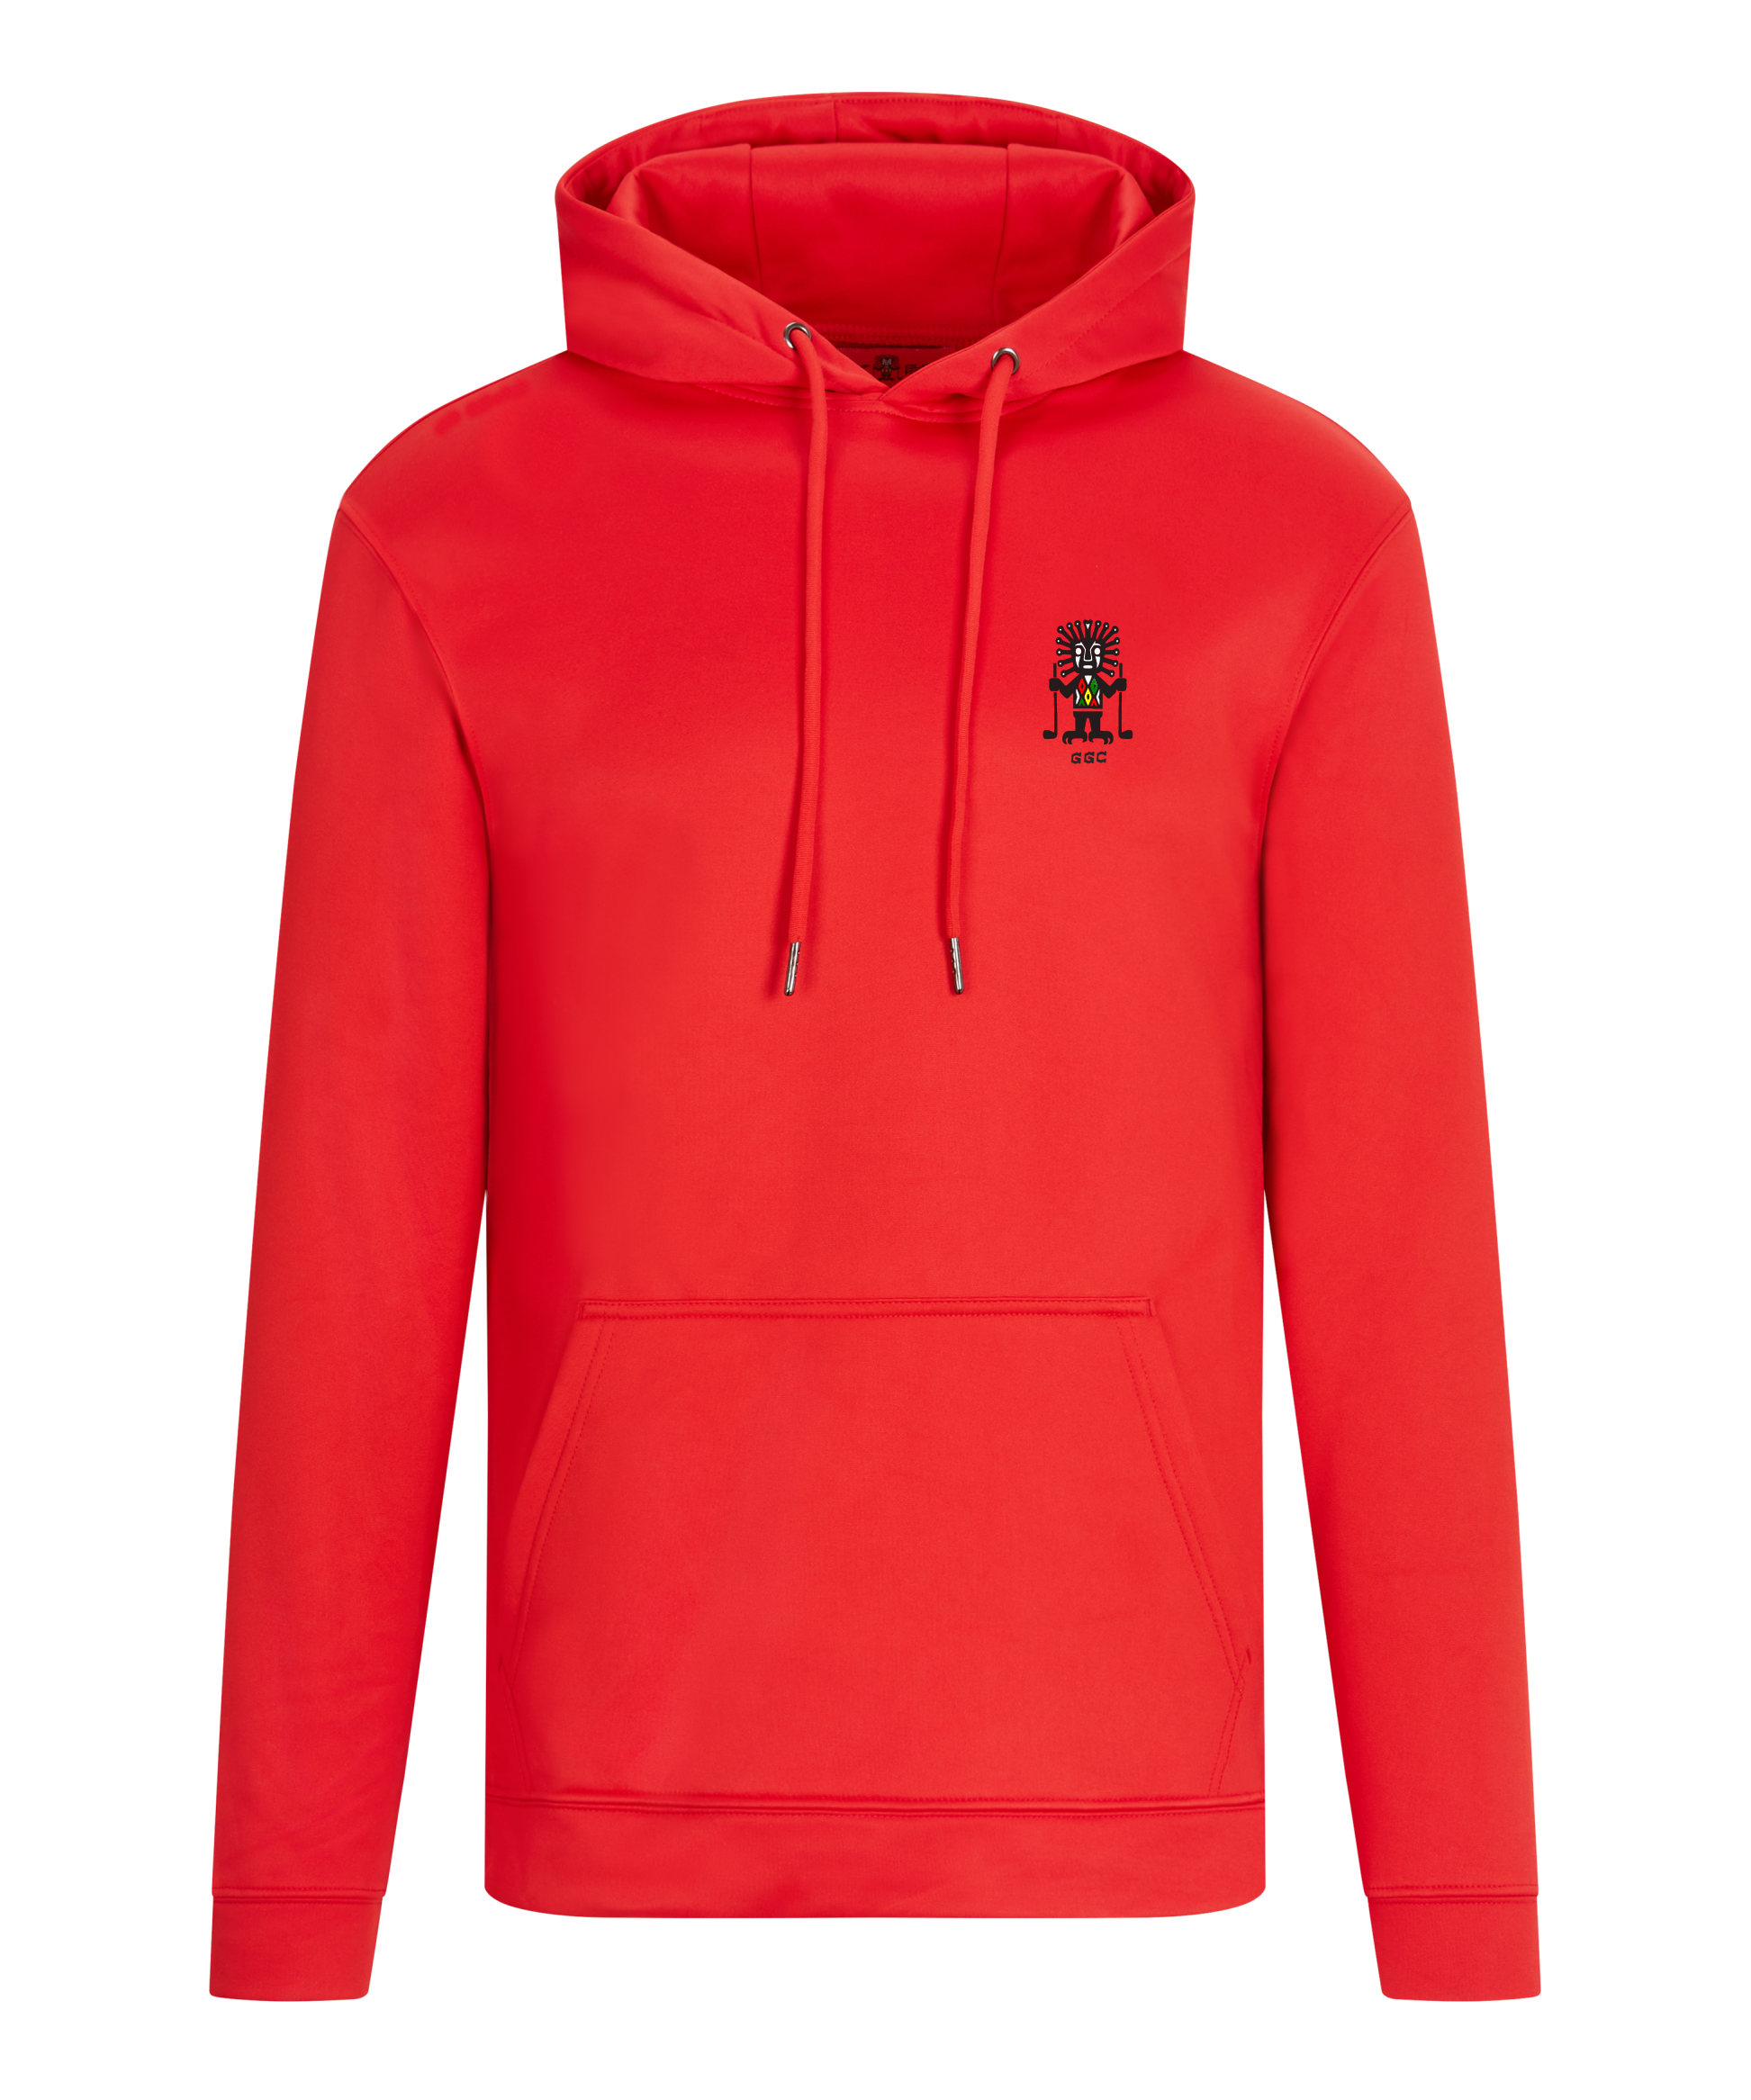 Golf God Clothing XL Logo Red Hoodie 